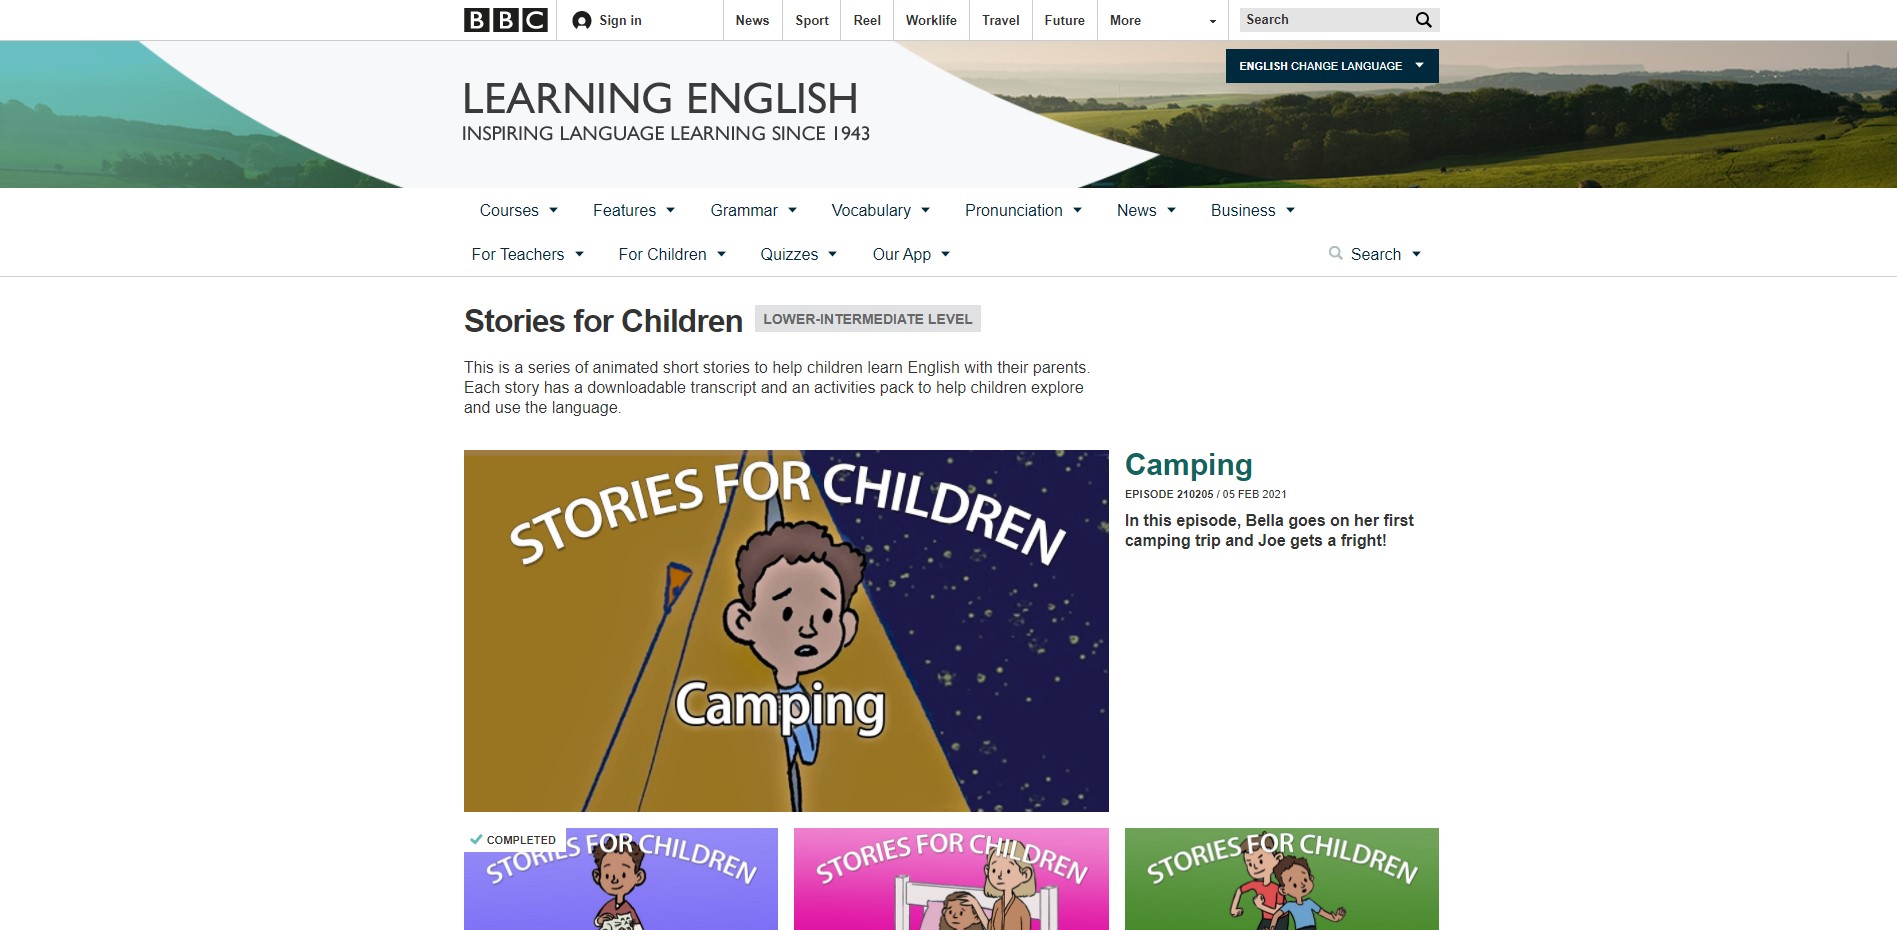 Топ сервисов онлайн-преподавателя: BBC: Learning English - для изучения английского языка